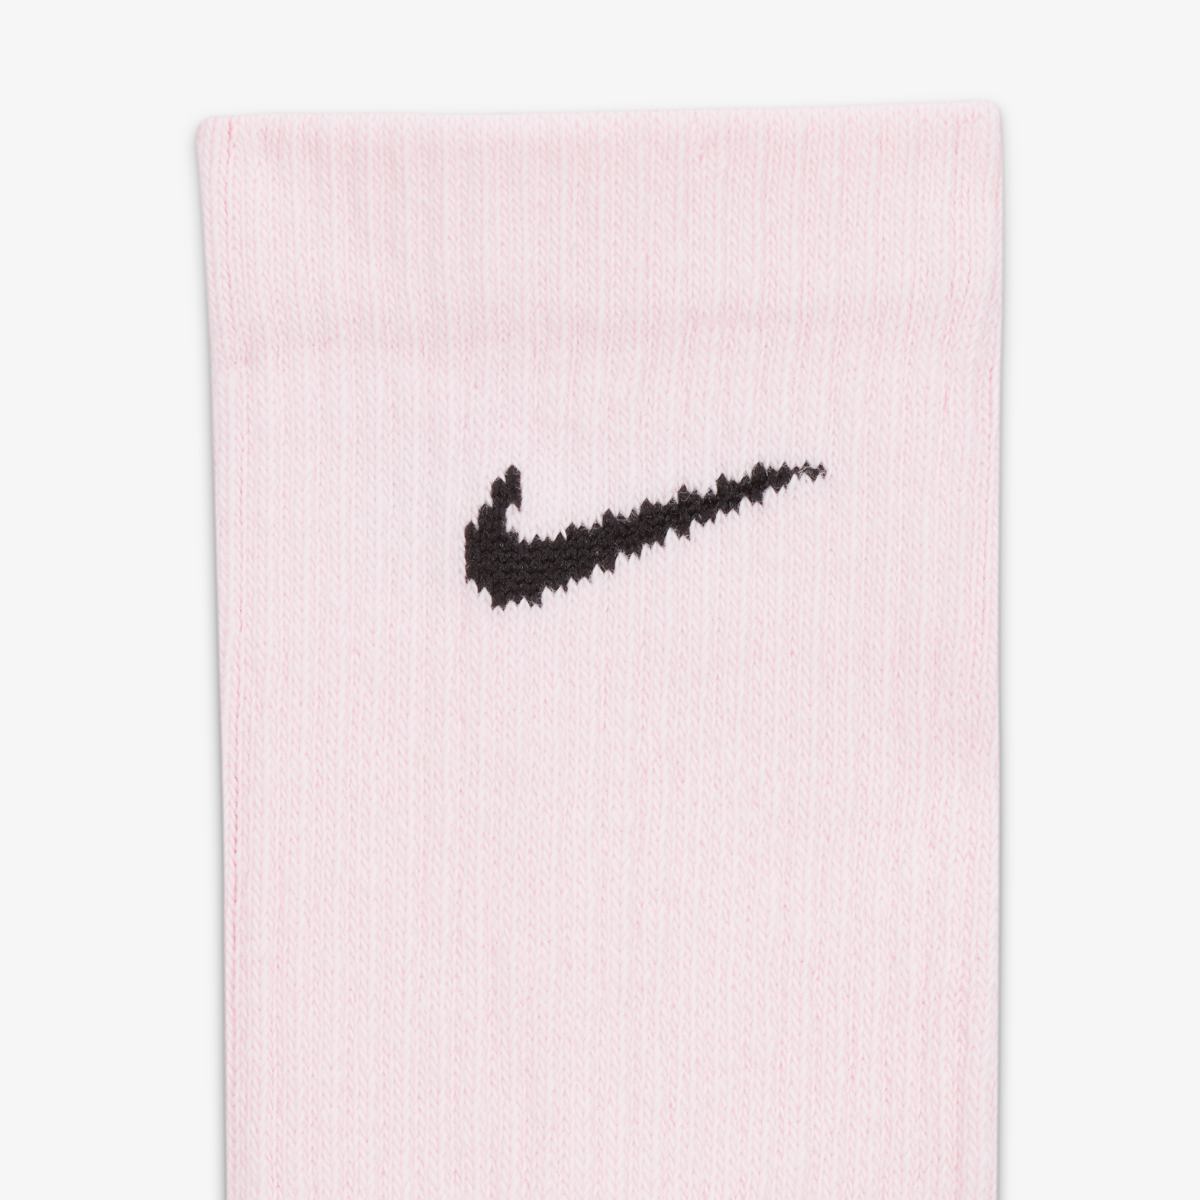 Носки Nike Everyday Plus Cushioned